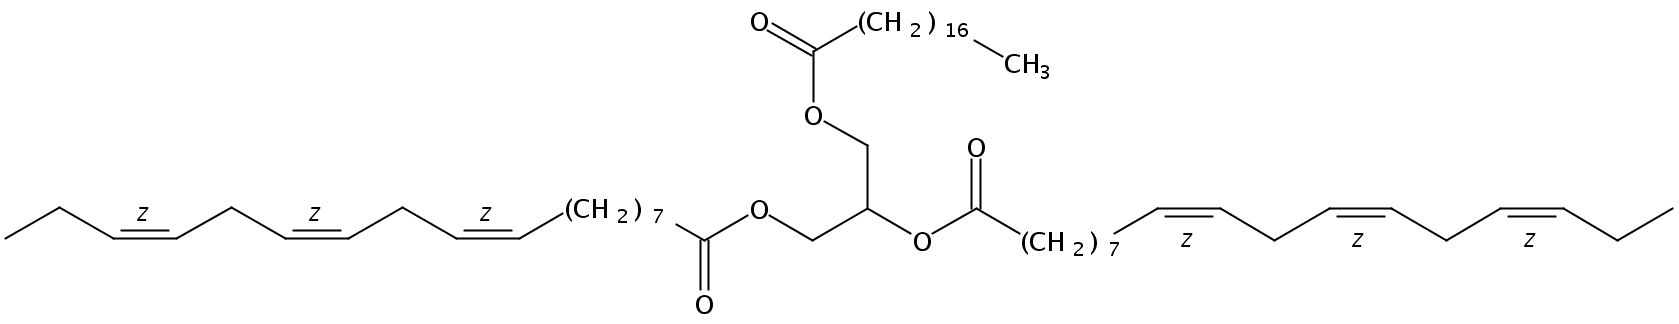 Structural formula of 1,2-Linolenin-3-Stearin